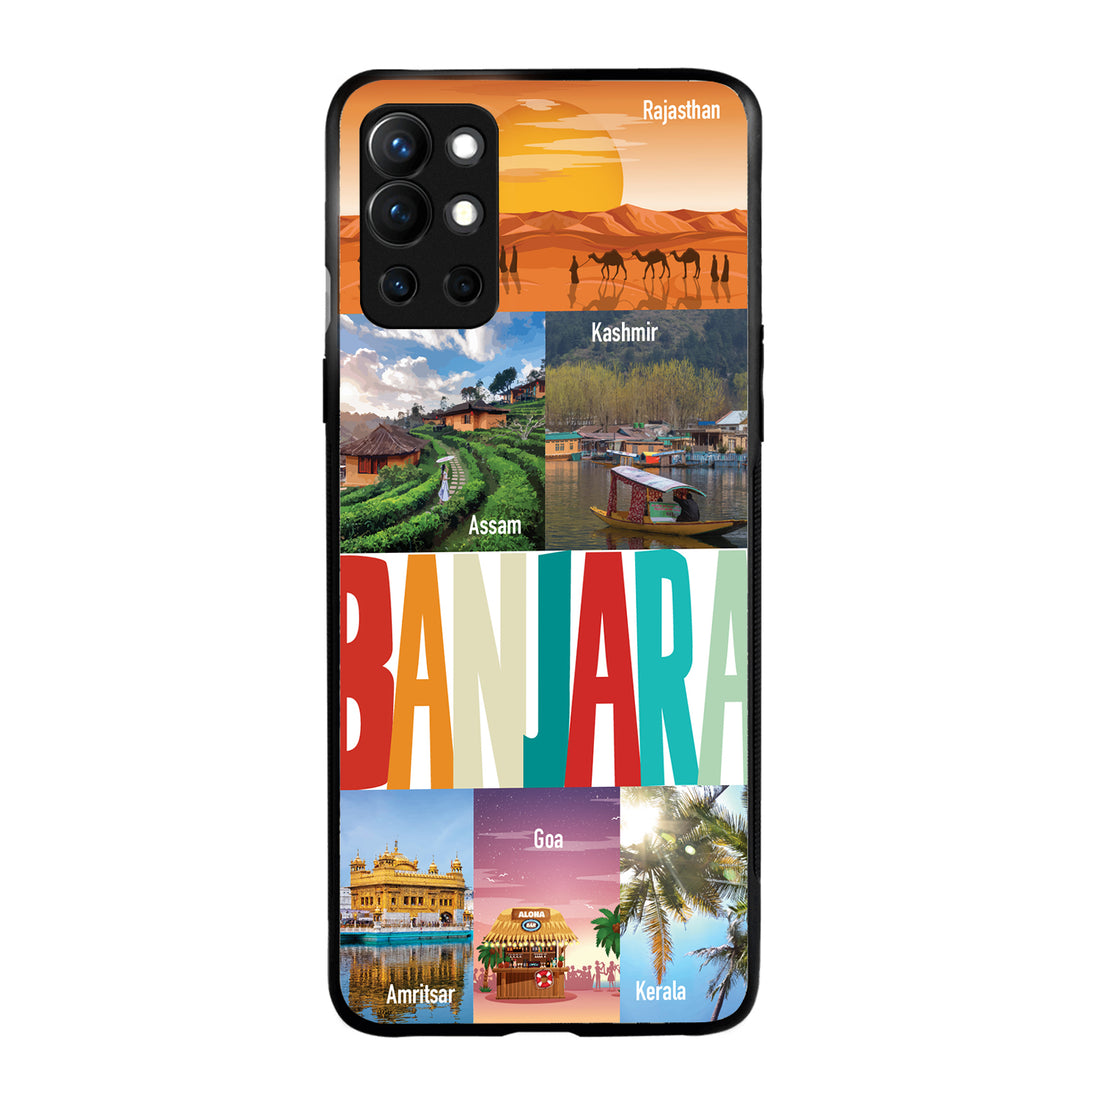 Banjara Travel Oneplus 9 Pro Back Case